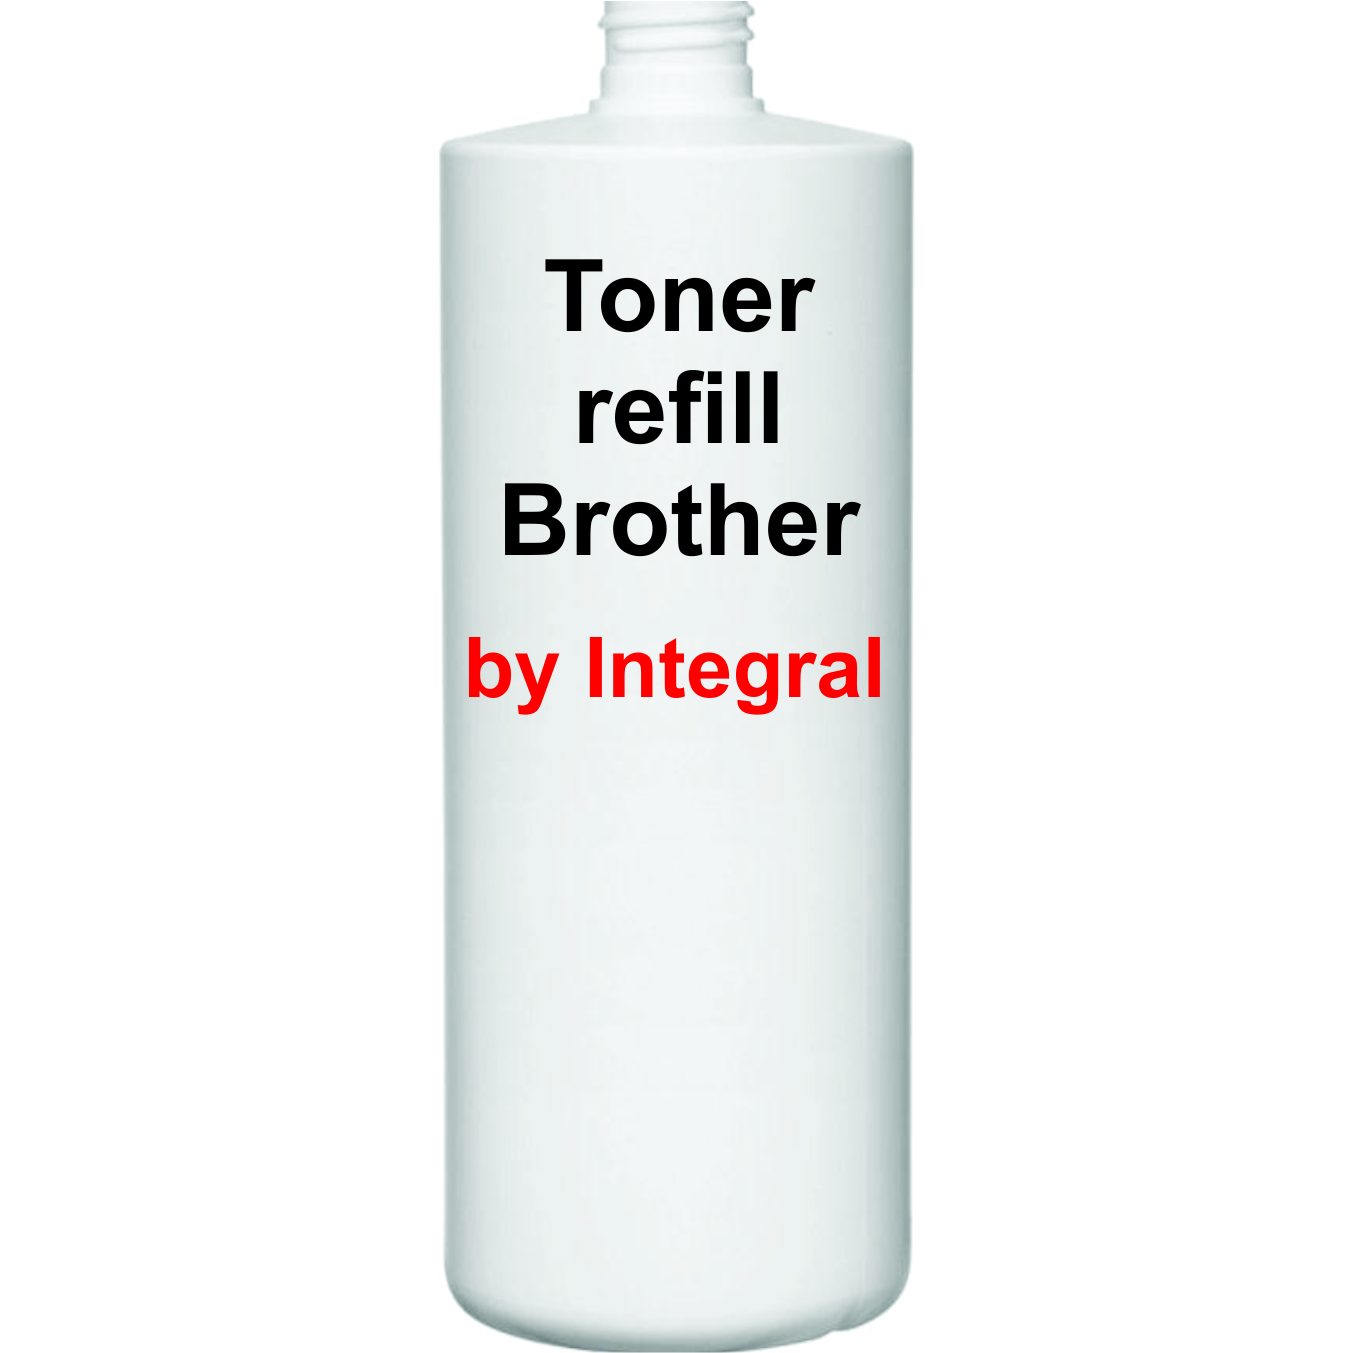 Toner refill Brother TN2310 TN2320 1000g by Integral